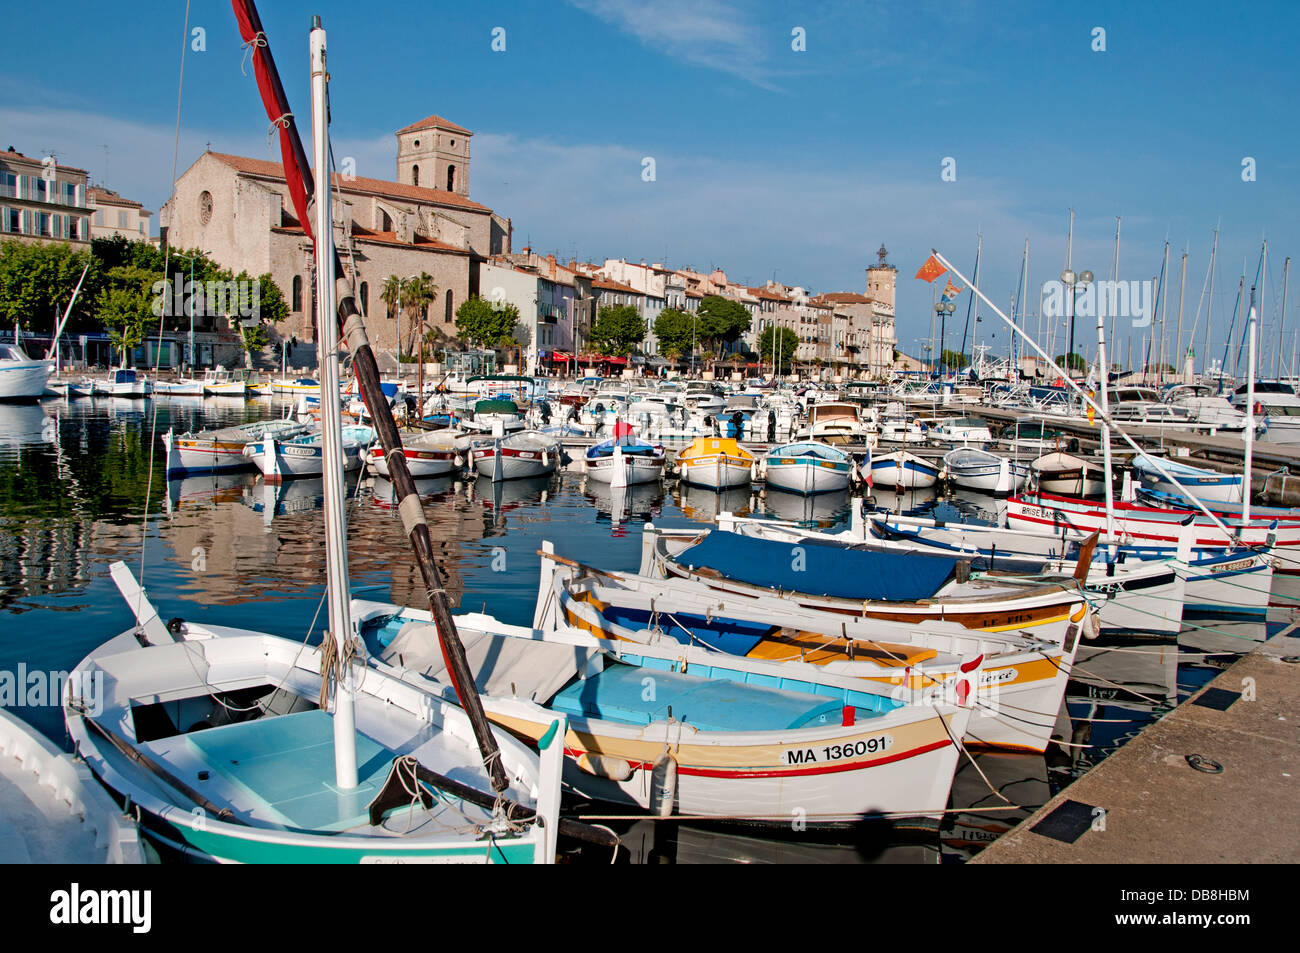 La Ciotat alten Vieux Port Hafen Provence Côte d ' Azur Cote d ' Azur Frankreich mediterran Stockfoto